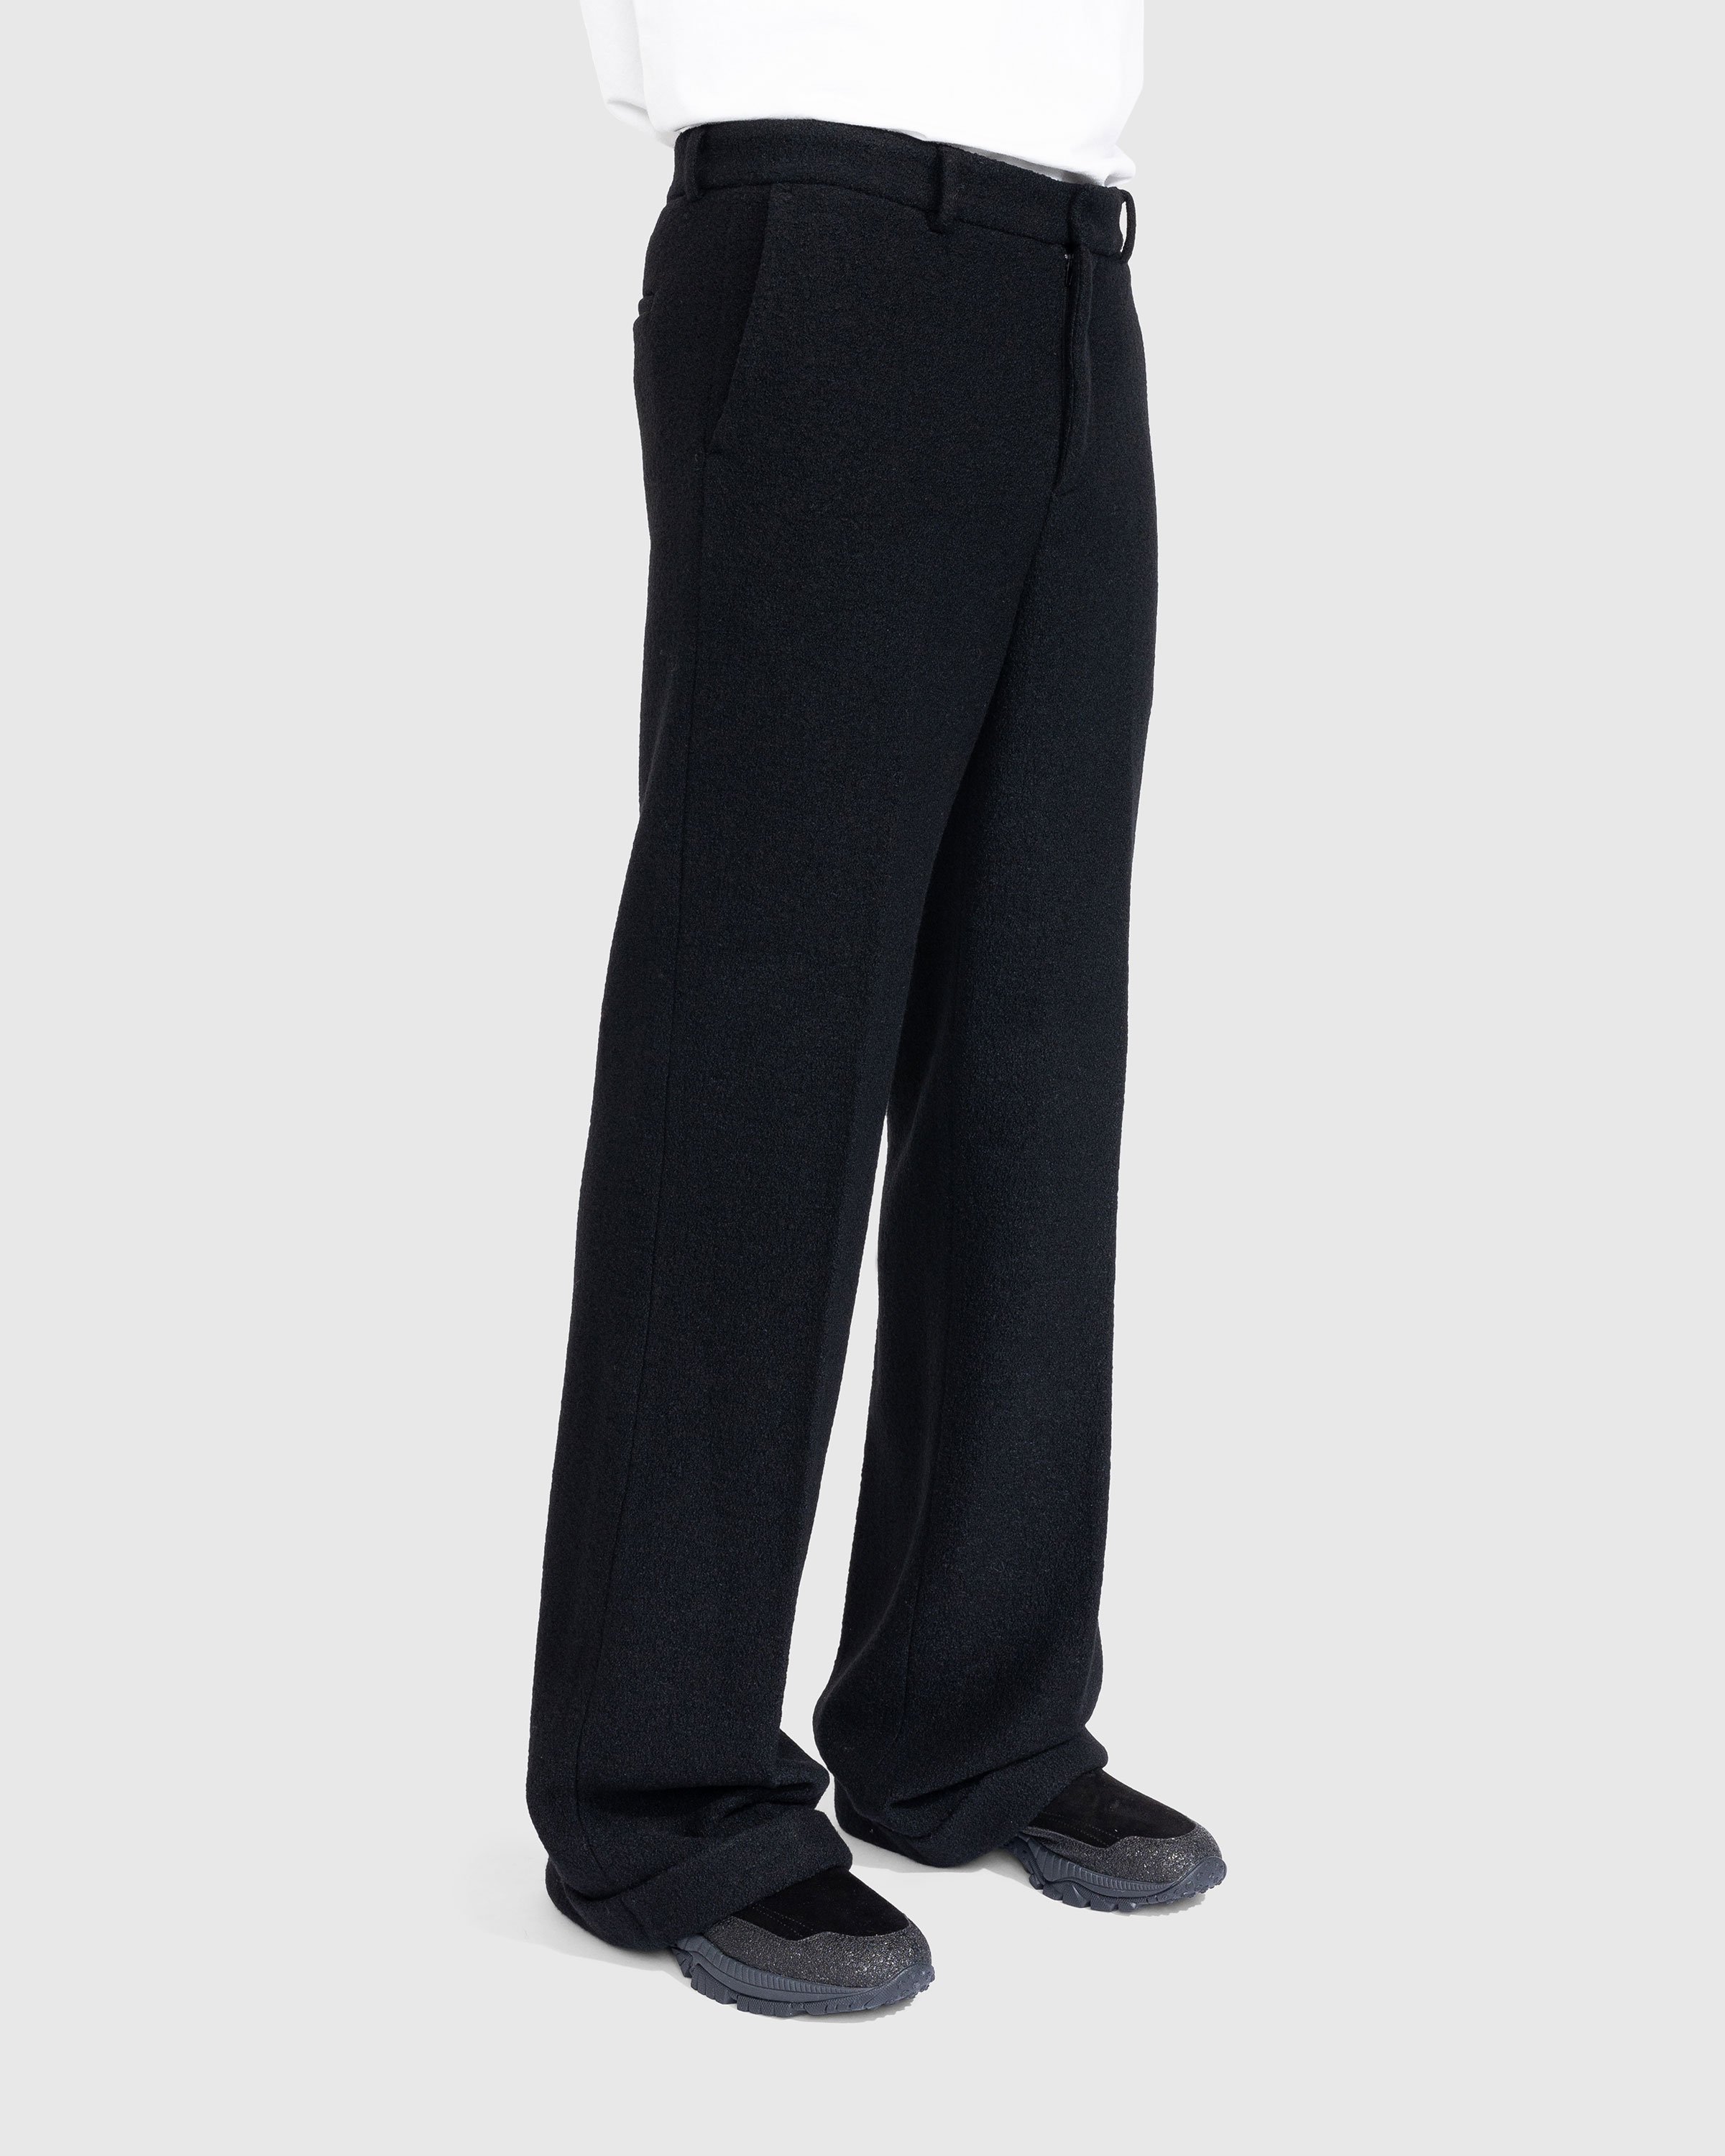 Trussardi - Boucle Jersey Trousers Black - Clothing - Black - Image 3